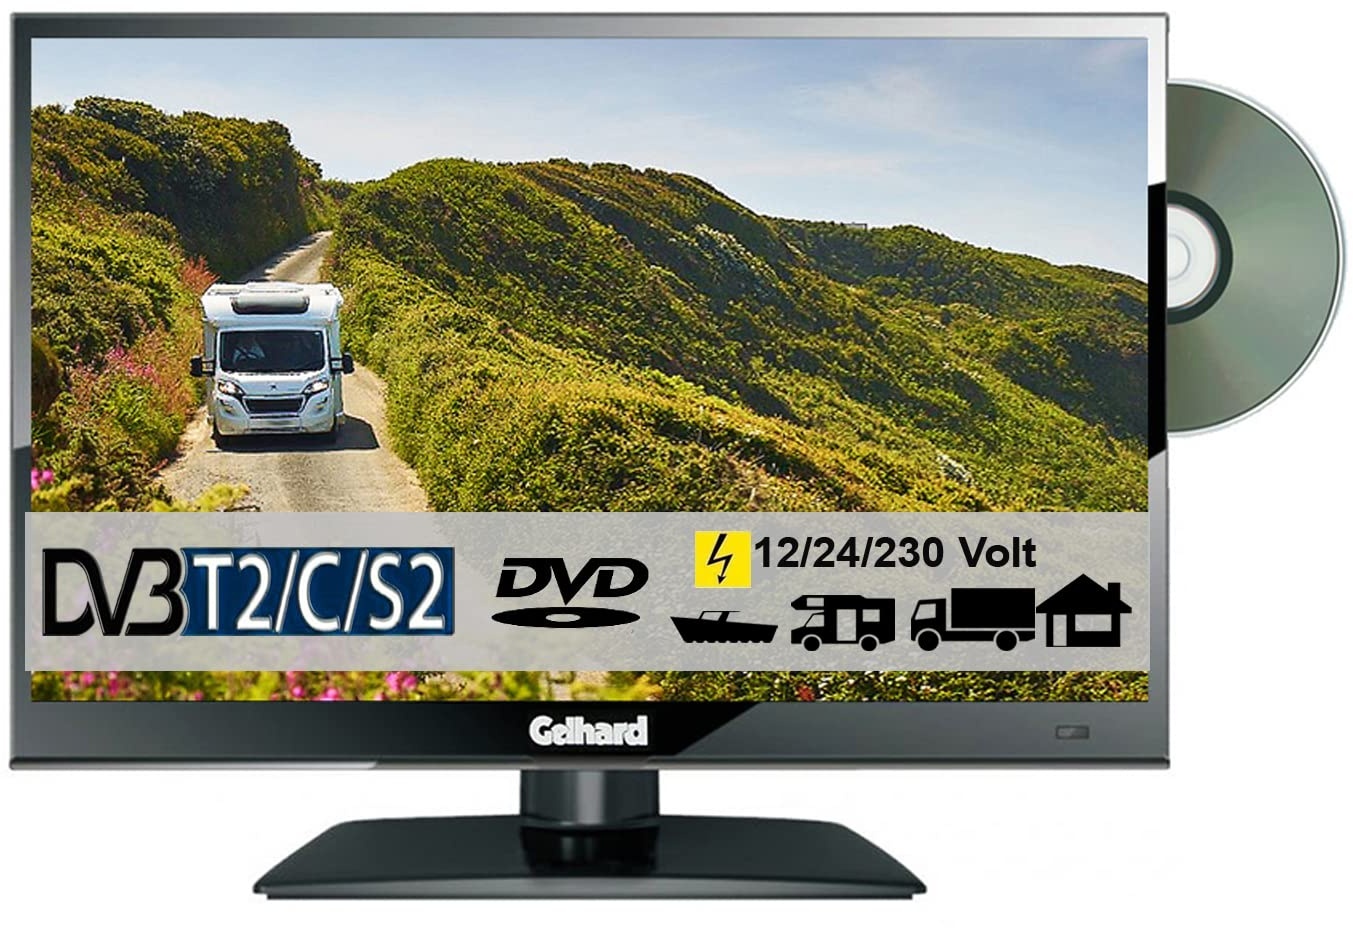 Gelhard GTV1682PVR DVD 16 Zoll Widescreen TV Full HD